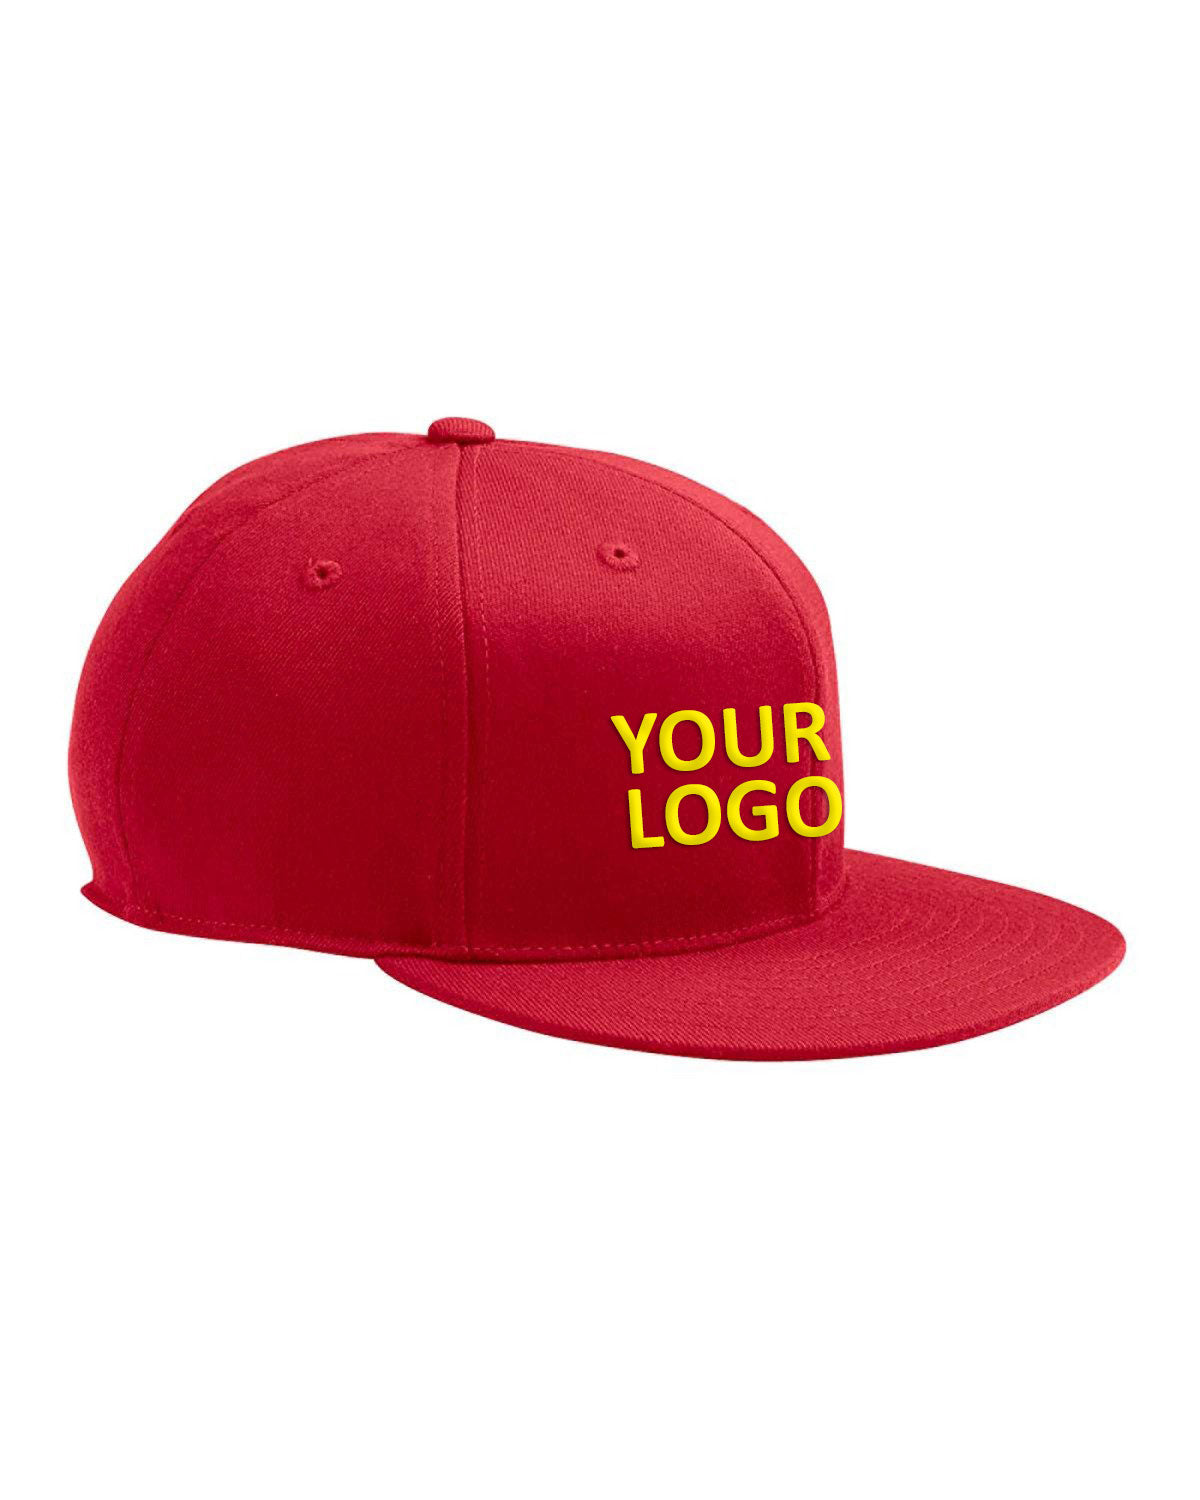 Branded Flexfit Premium 210 6210 Red Cap Fitted